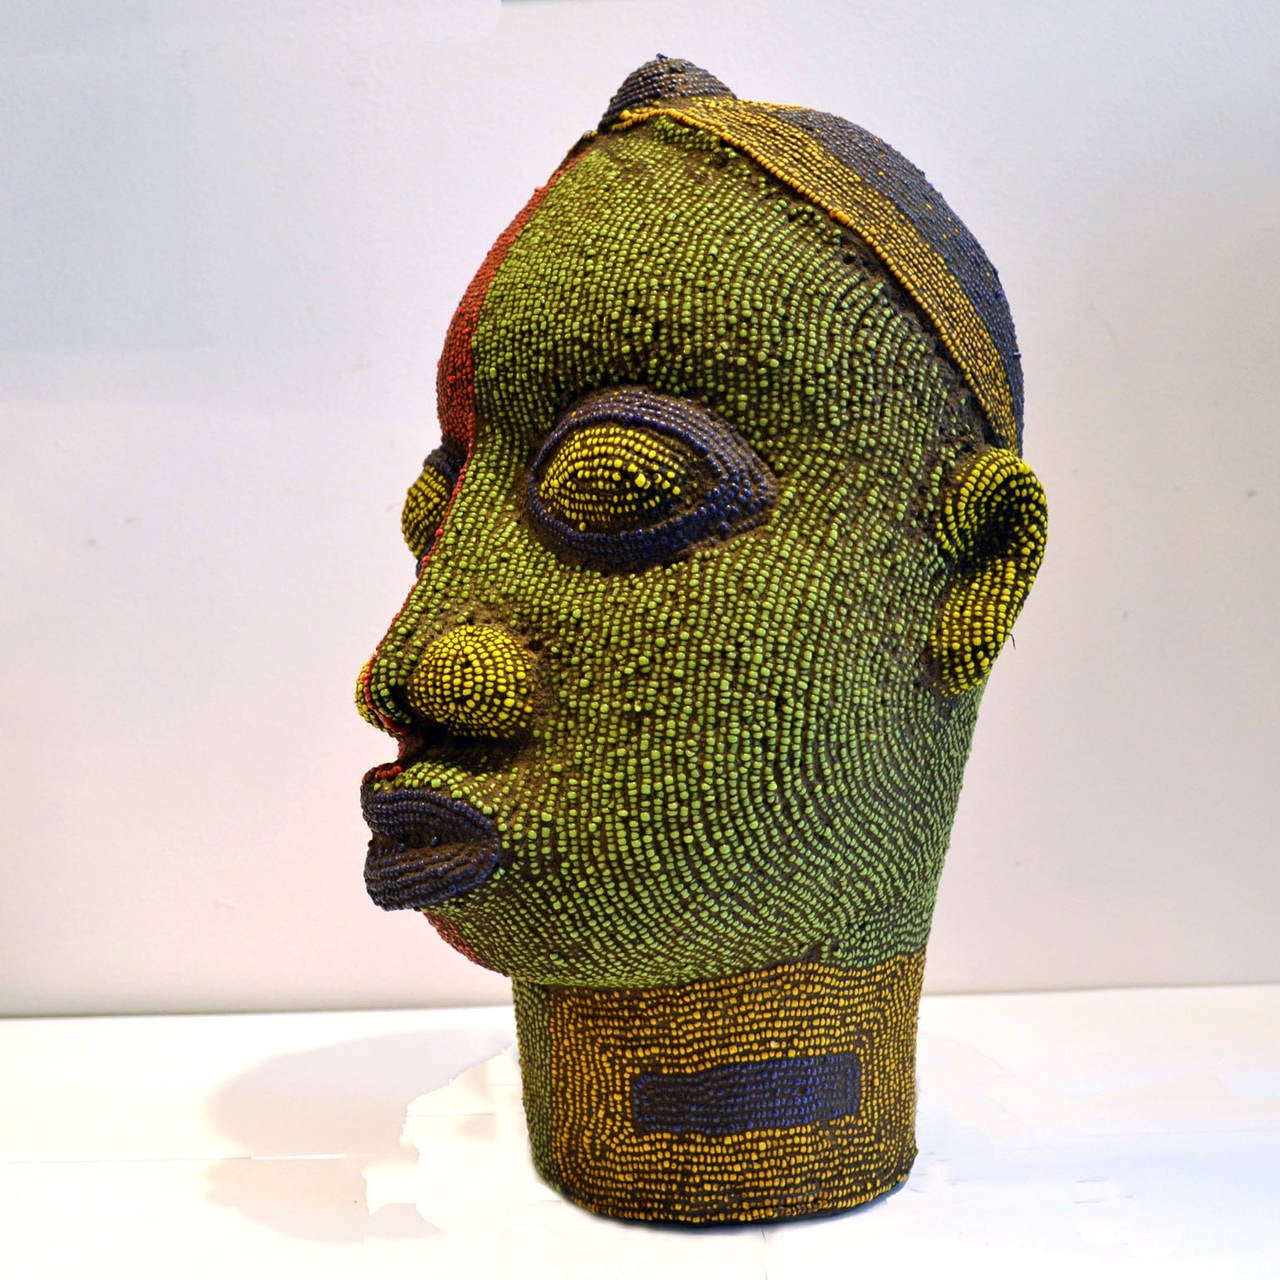 Nigerian Female Beaded Sculpture